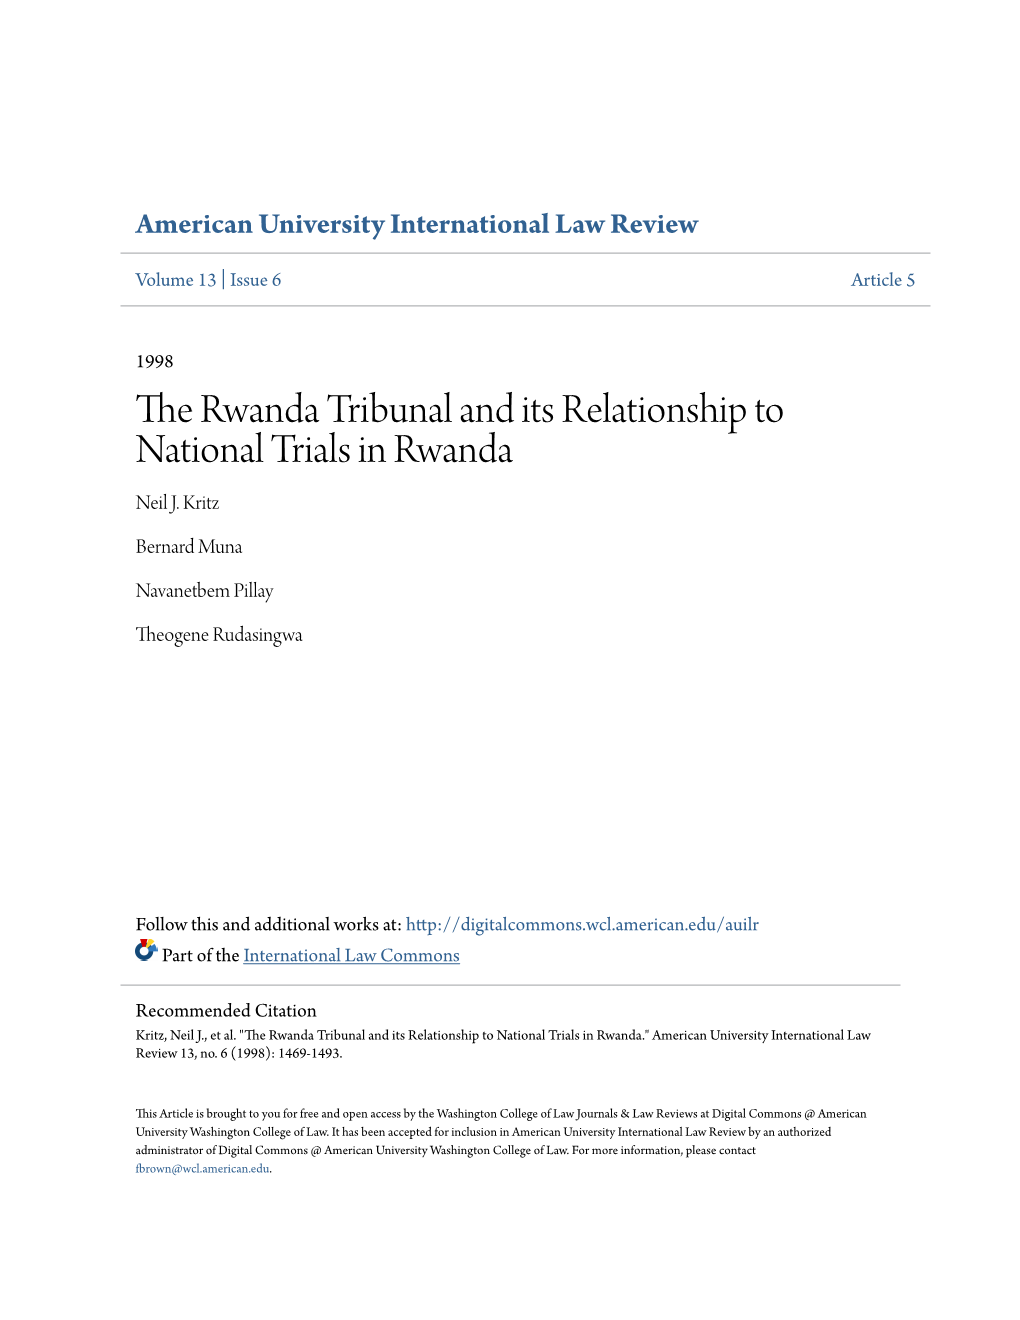 The Rwanda Tribunal and Its Relationship to National Trials in Rwanda